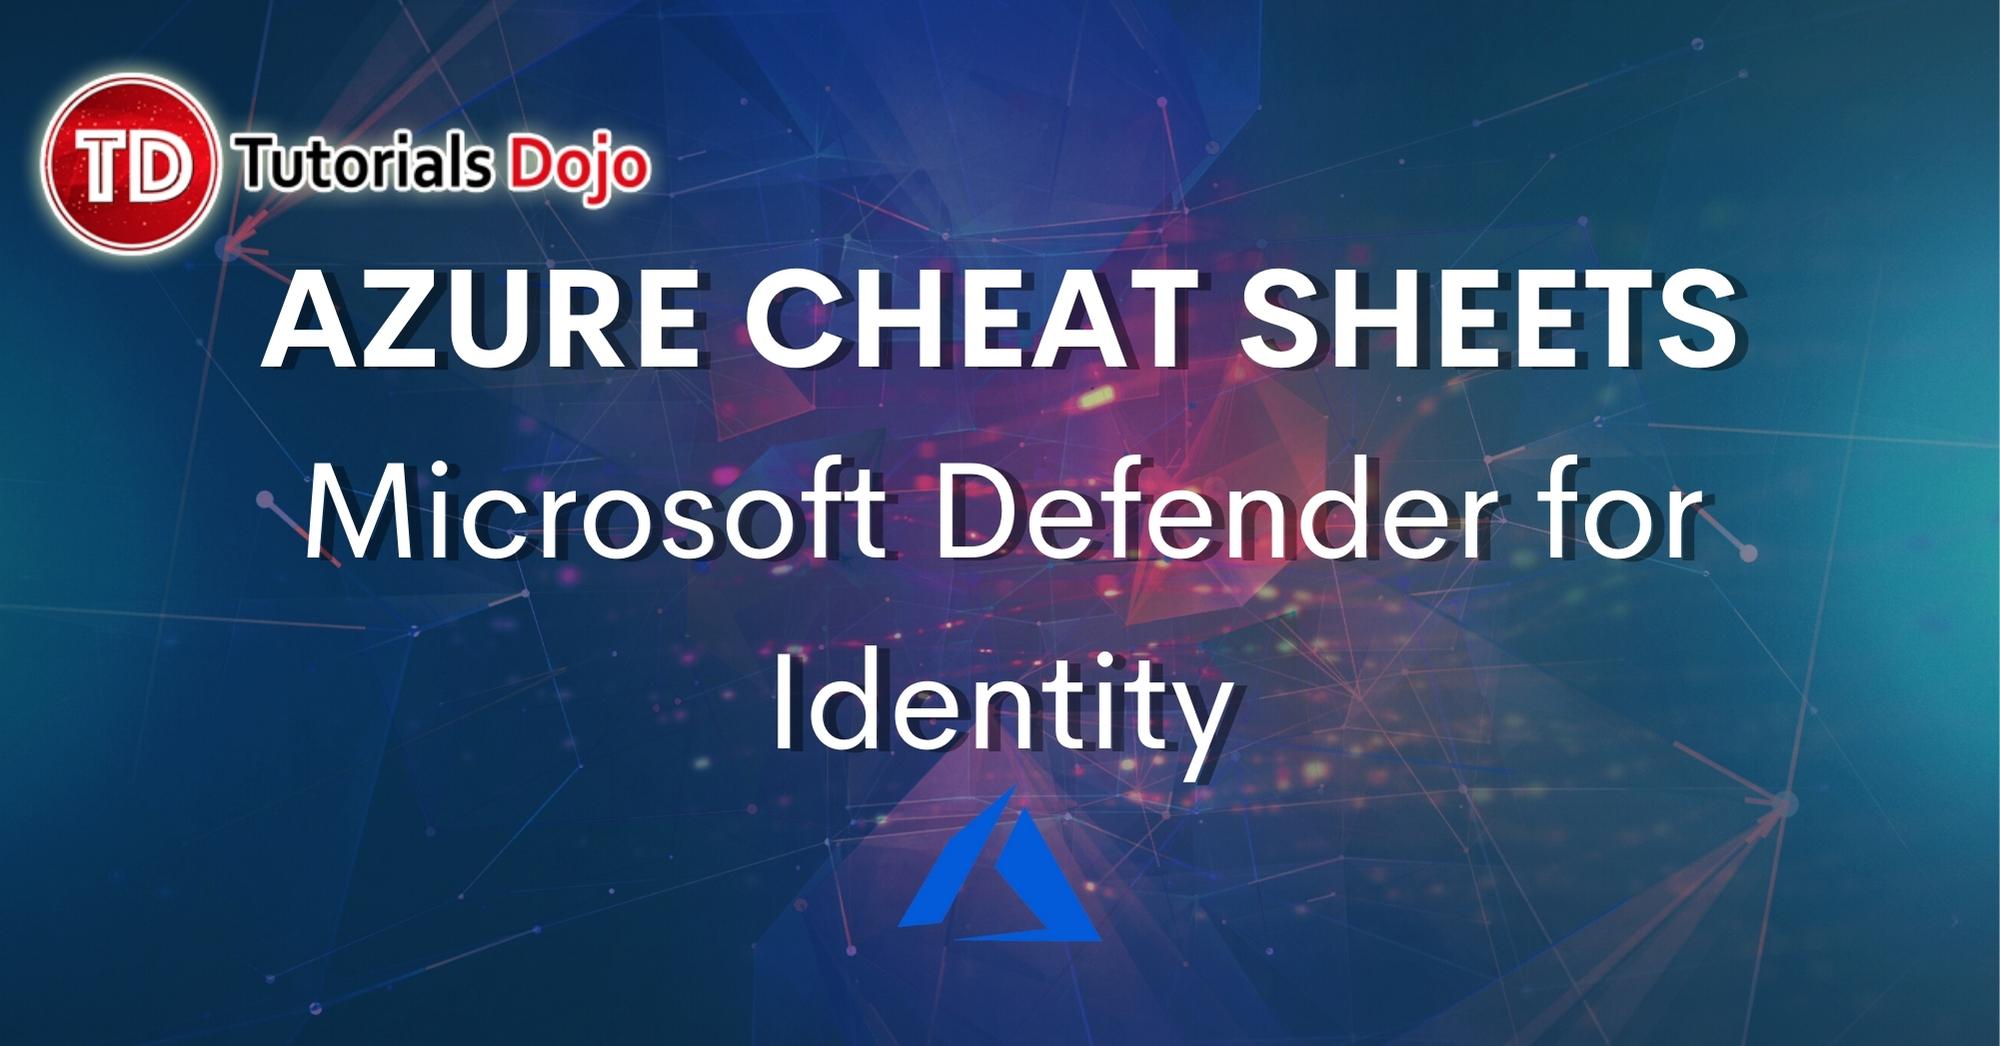 Microsoft Defender for Identity Cheat Sheet